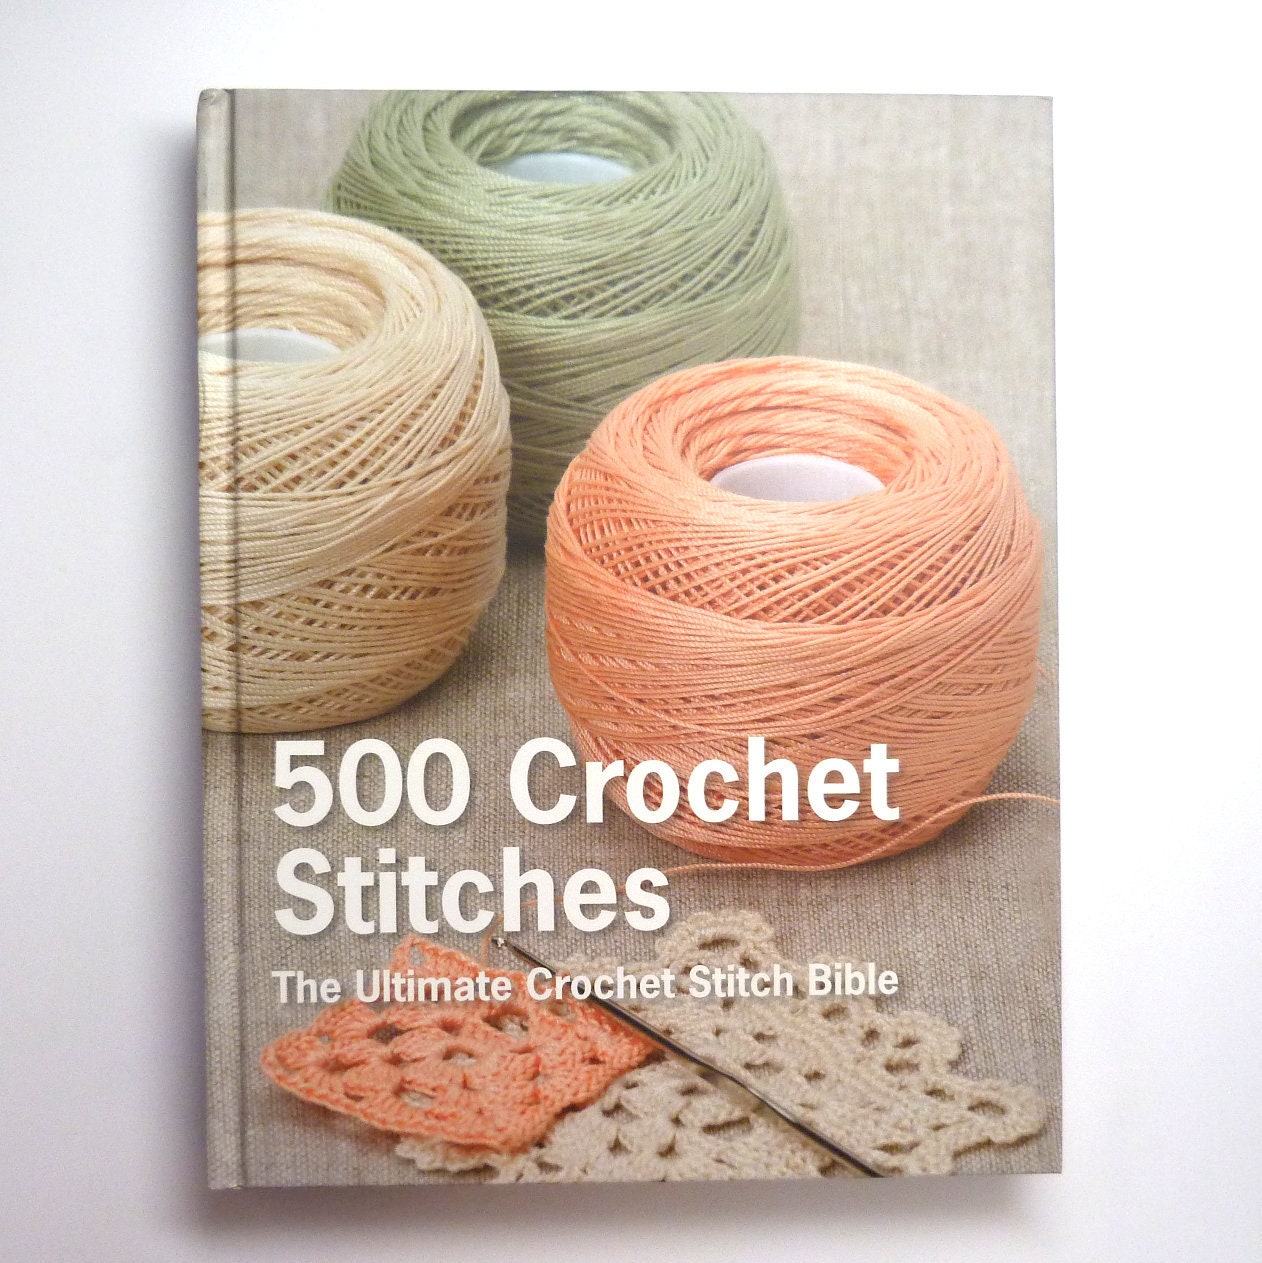 Complete Crochet Handbook - By Eveline Hetty-burkart & Beate